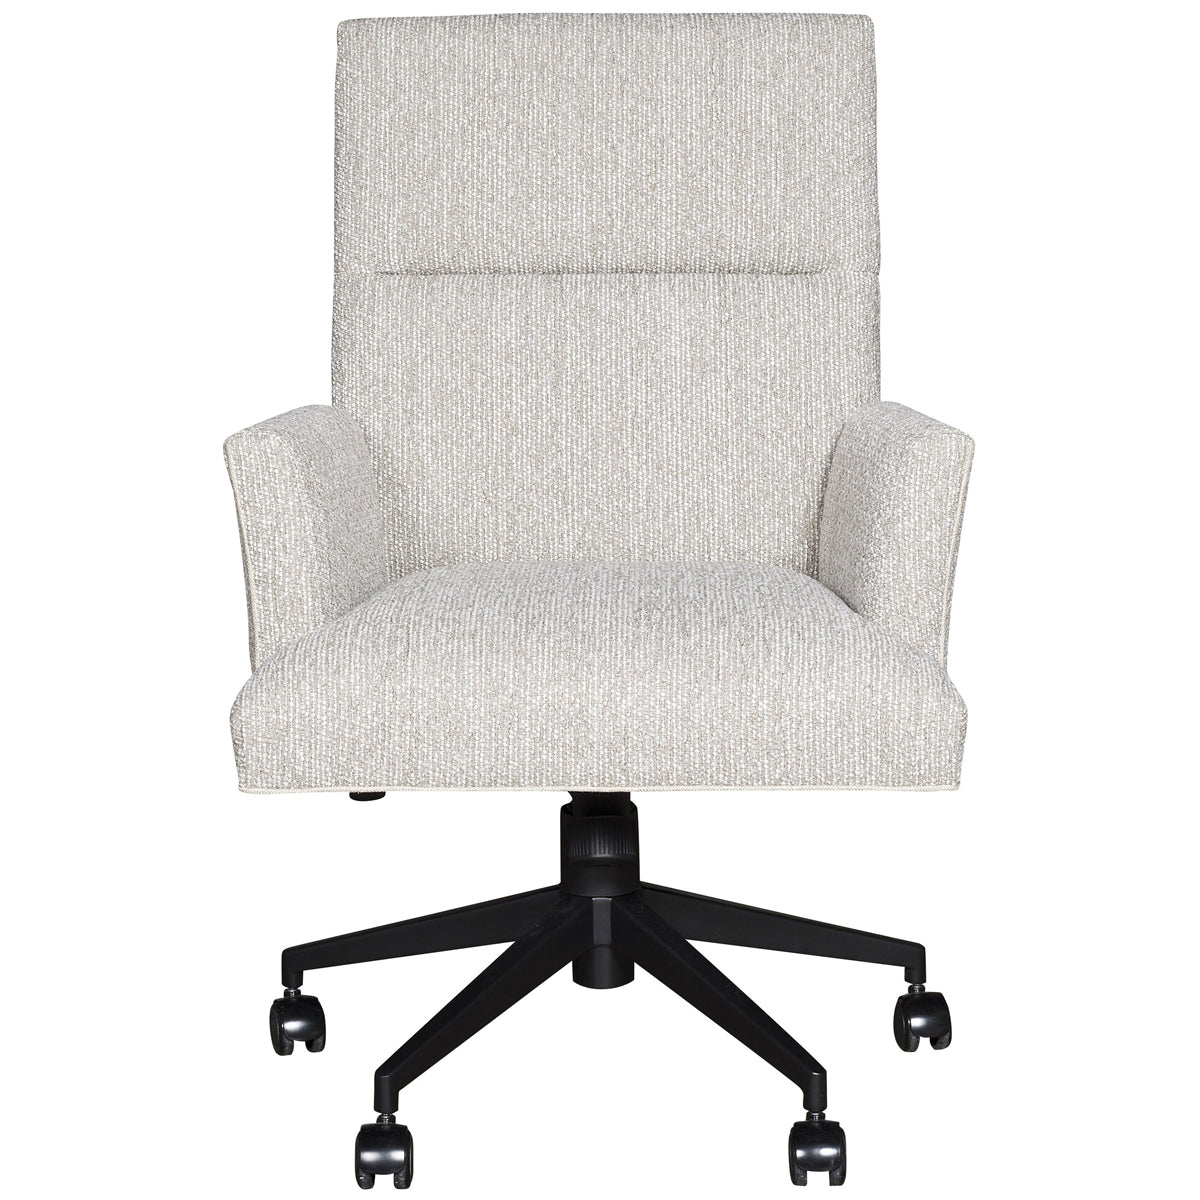 Vanguard Furniture Brattle Road Desk Chair